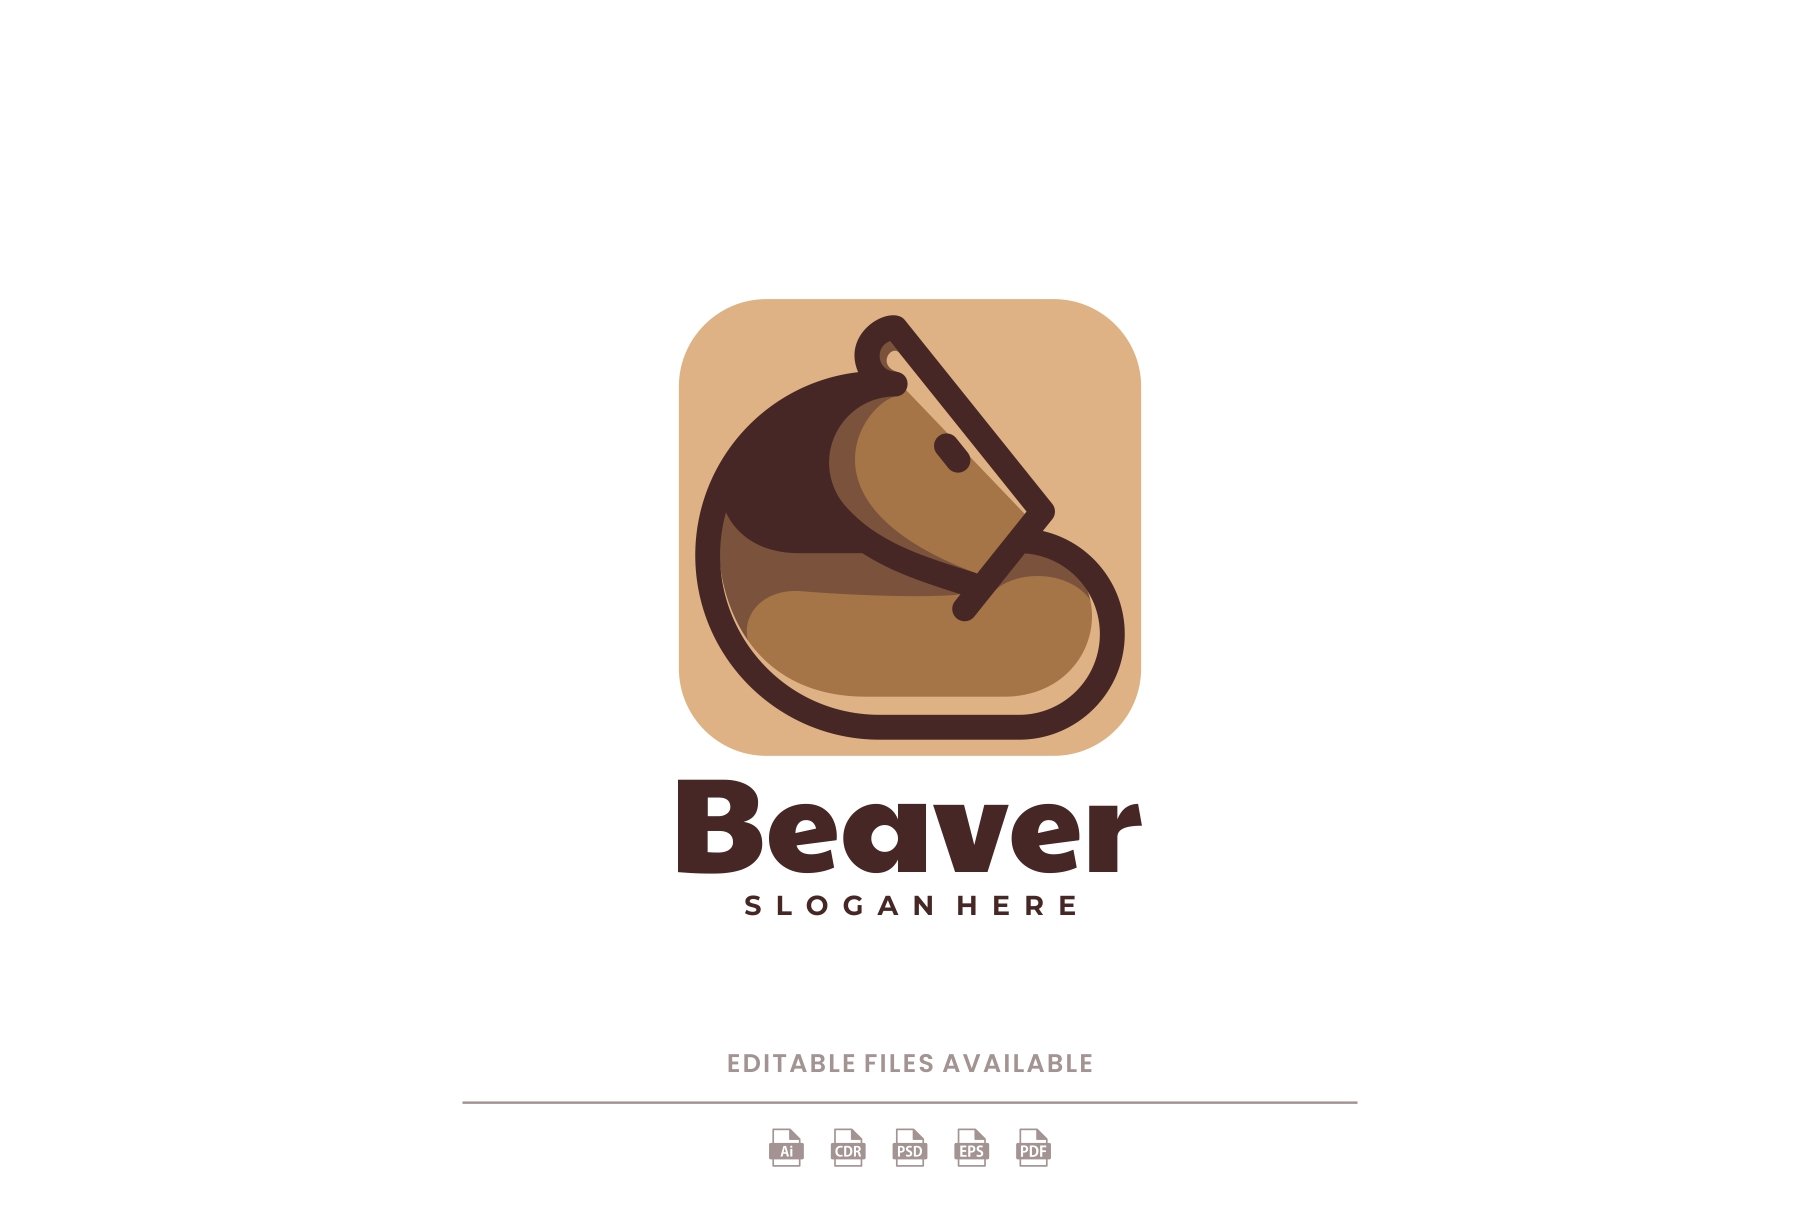 Beaver Simple Mascot Logo cover image.